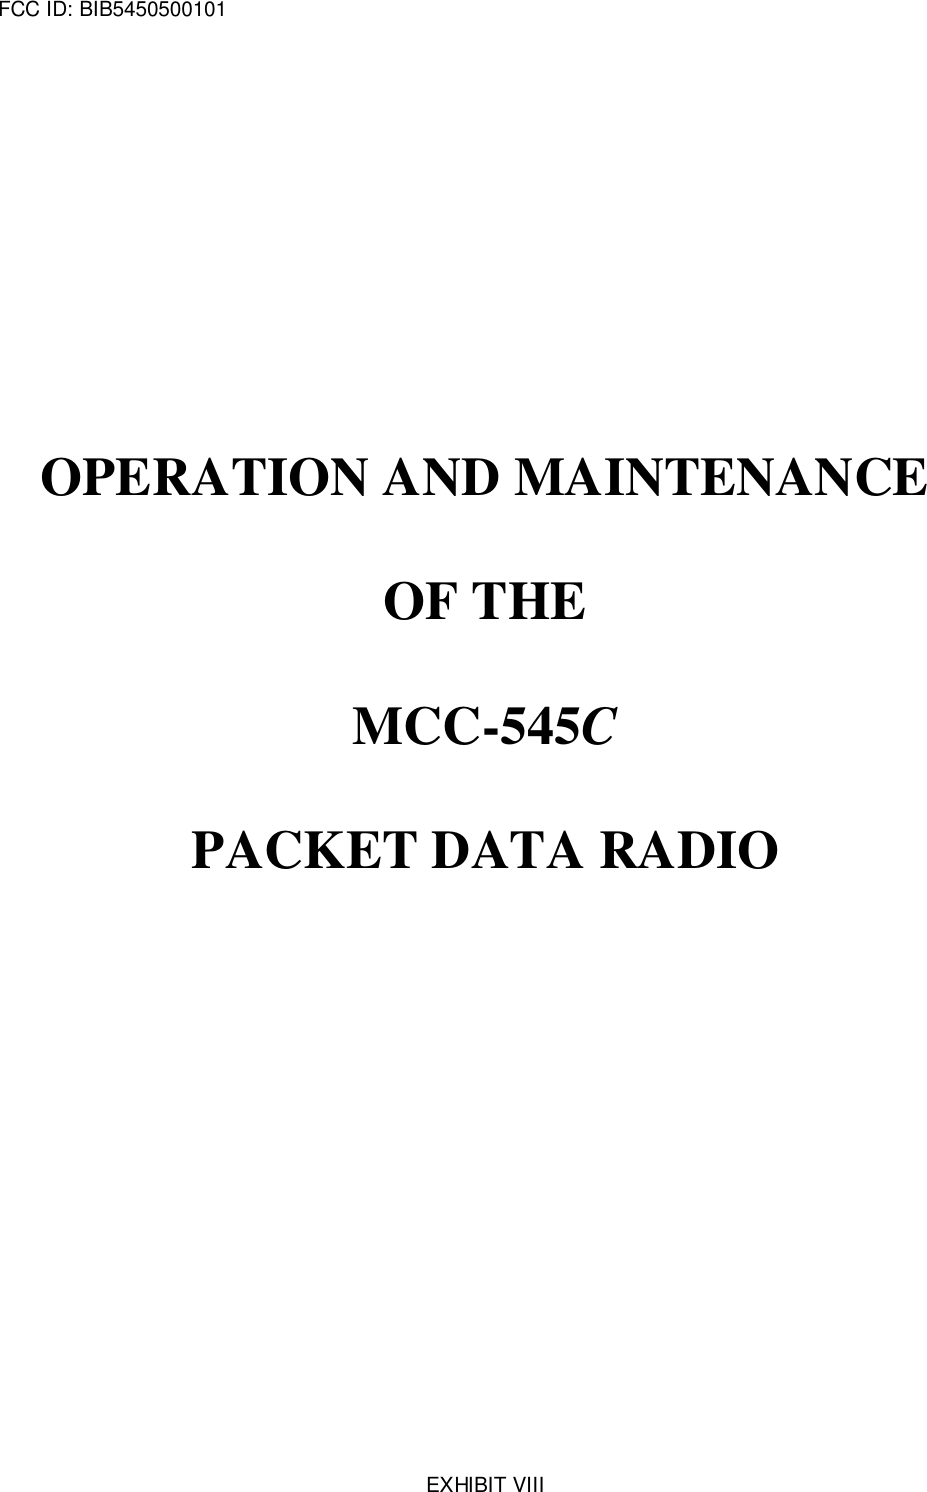 FCC ID: BIB5450500101EXHIBIT VIIIOPERATION AND MAINTENANCEOF THEMCC-545CPACKET DATA RADIO